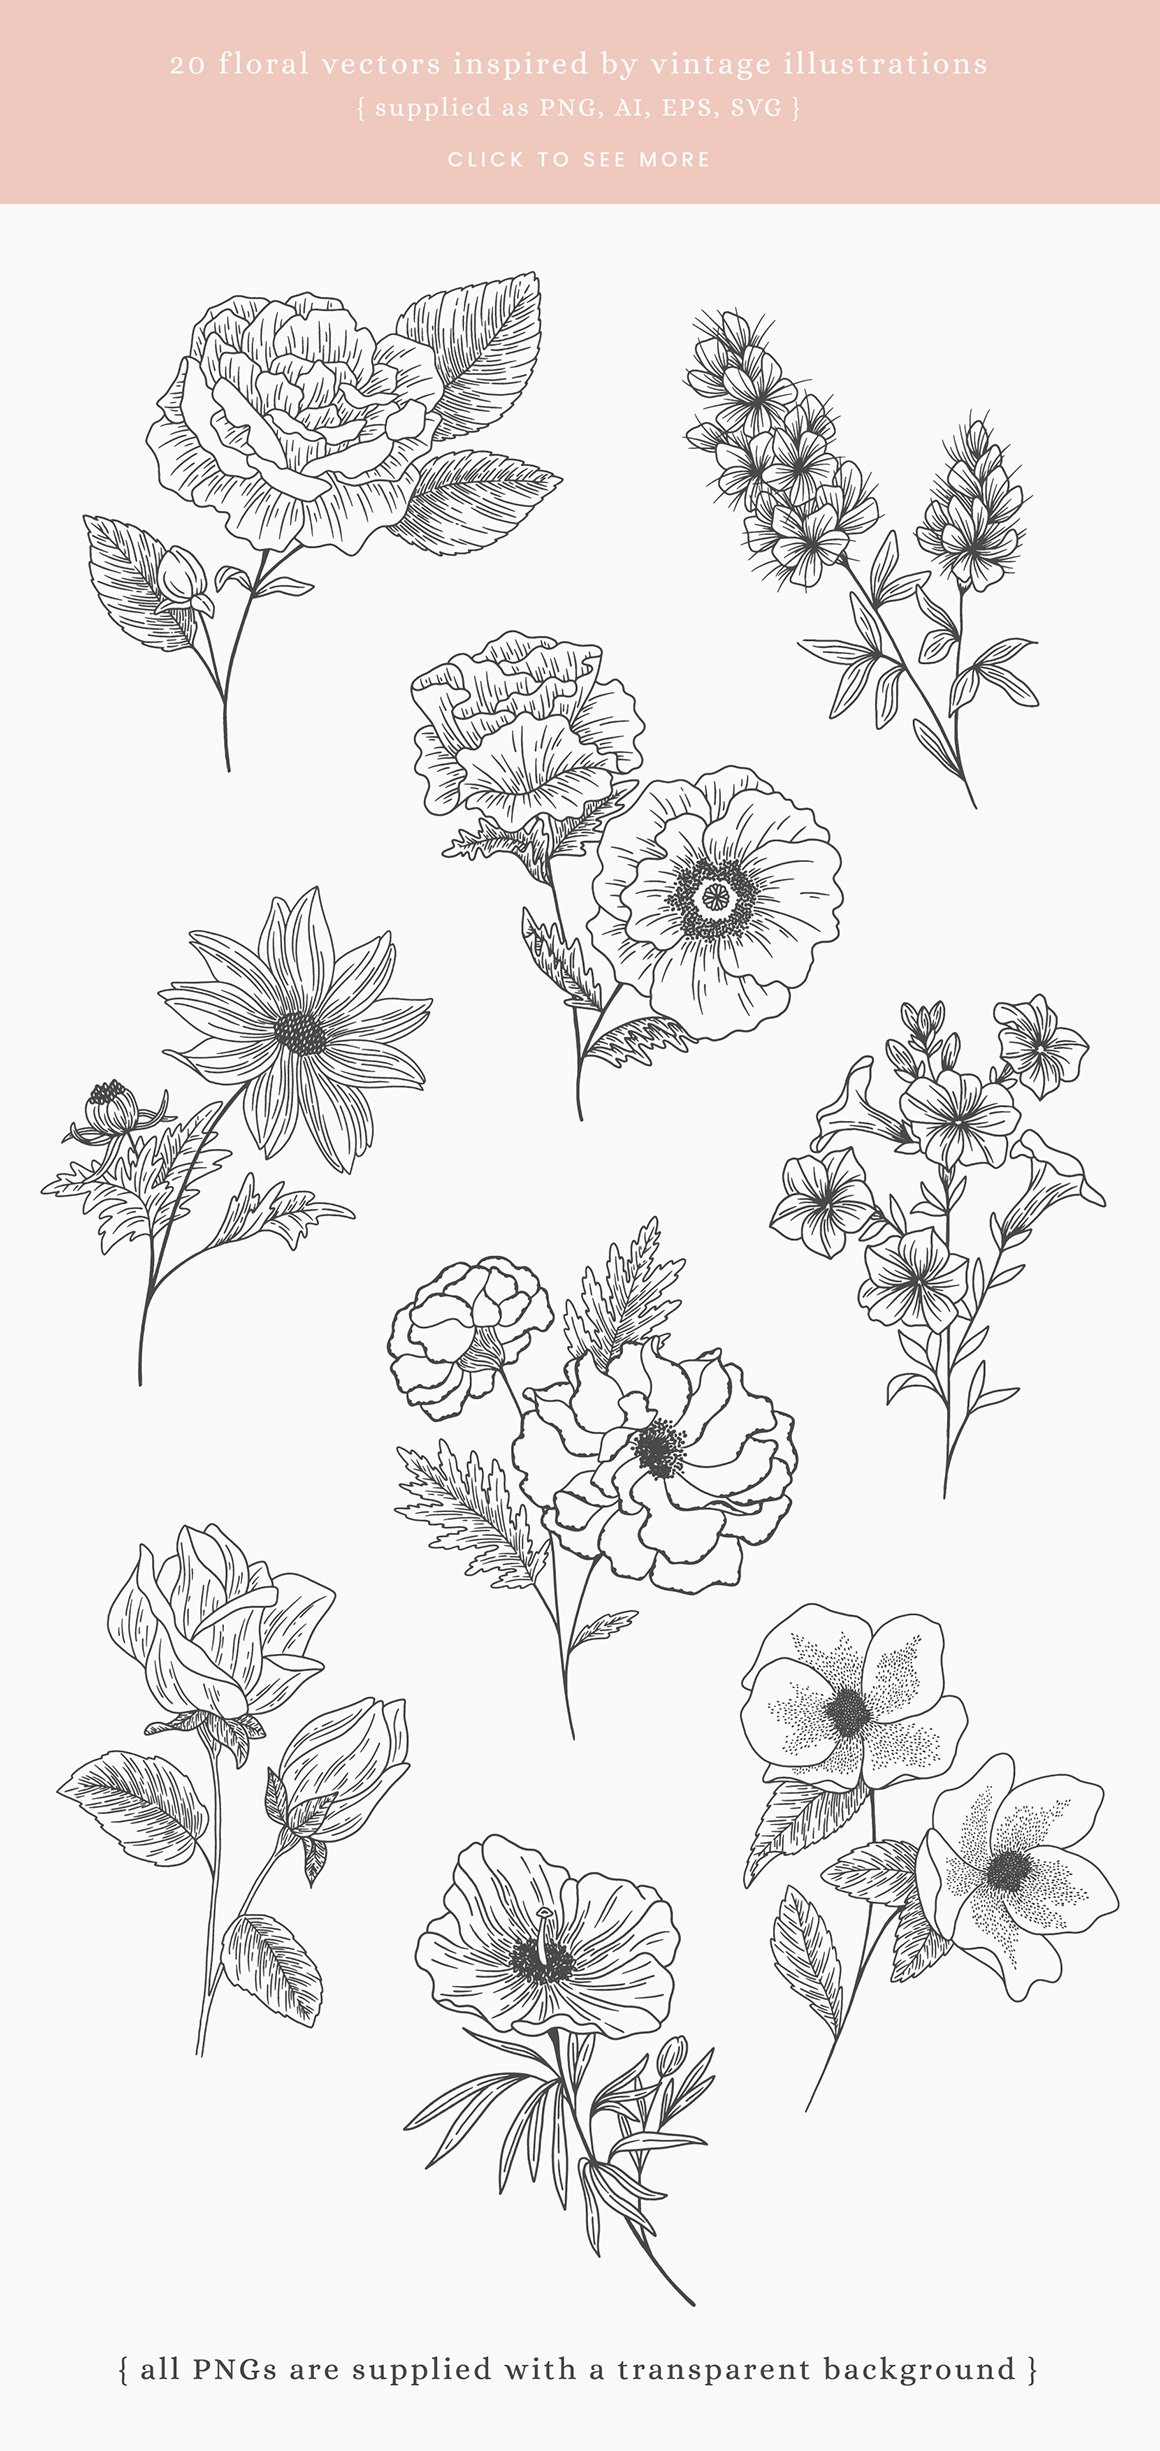 Floral Studies Vector Illustrations